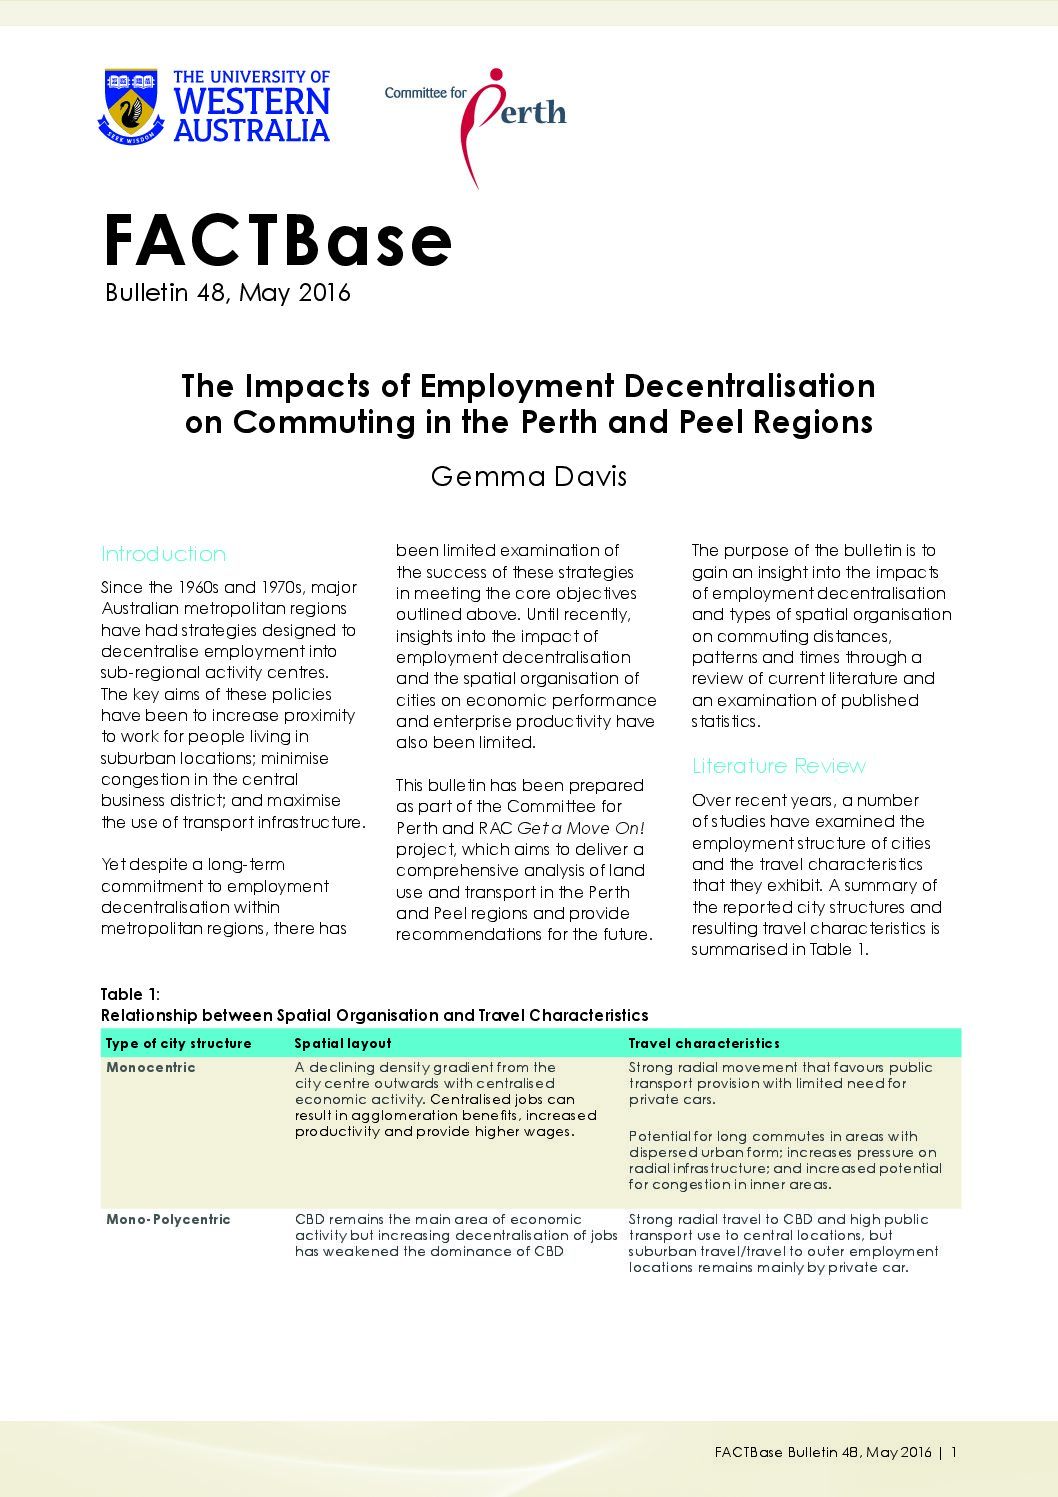 FACTBase Bulletin 48 - May 2016